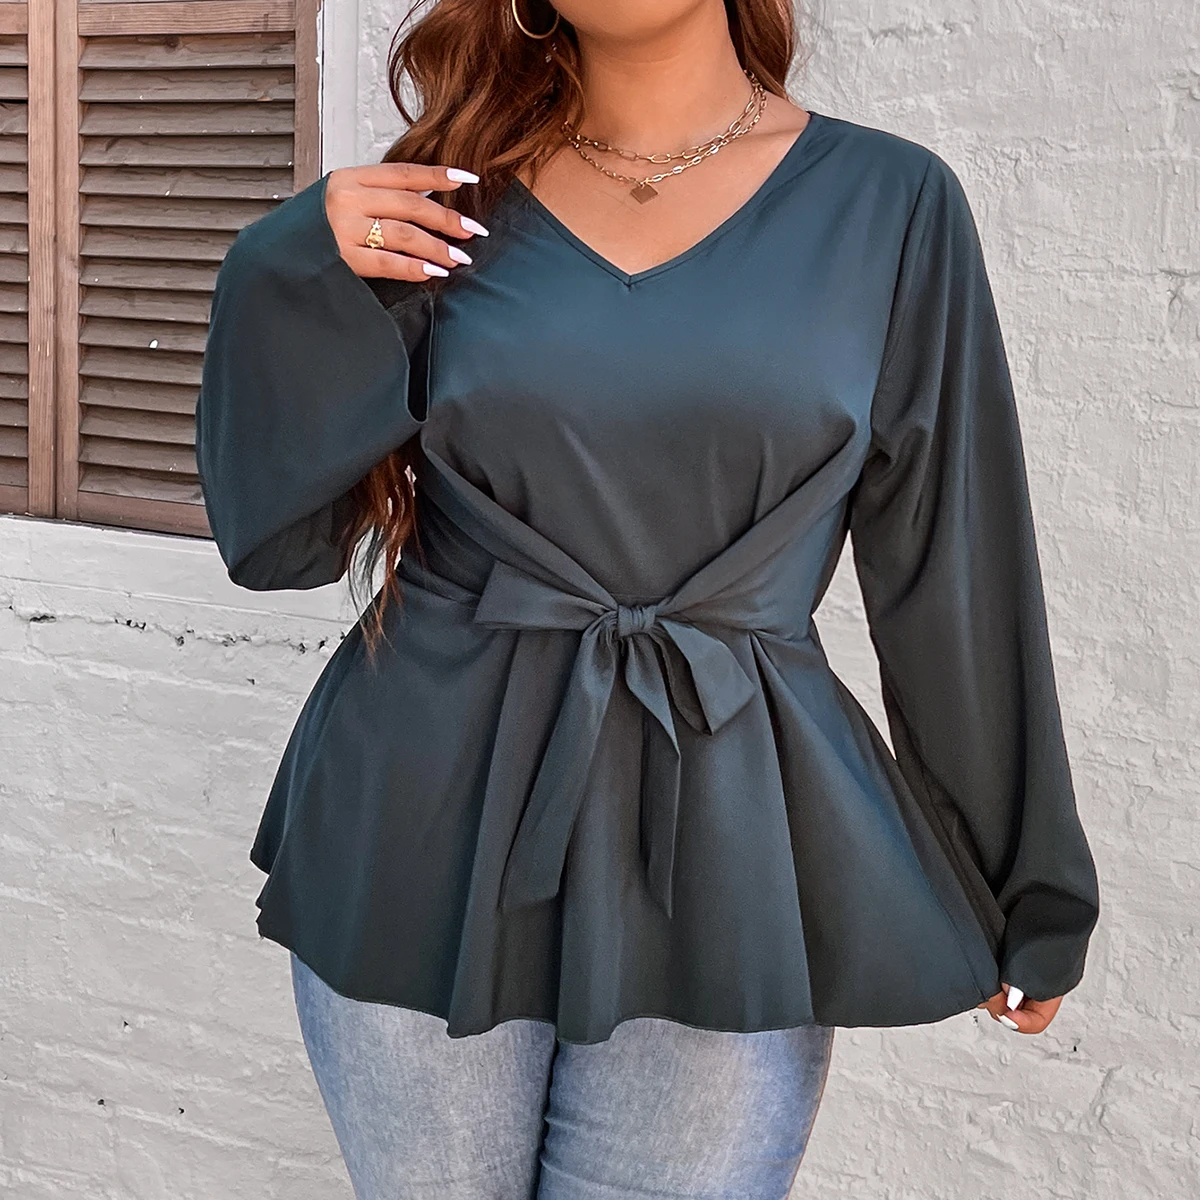 Women Plus Size 4XL Bow Blouses Peplum Tops Casual BlackT-Shirt for Ladies Long Sleeve V Neck Autumn Cotton Tee Shirts Fashion